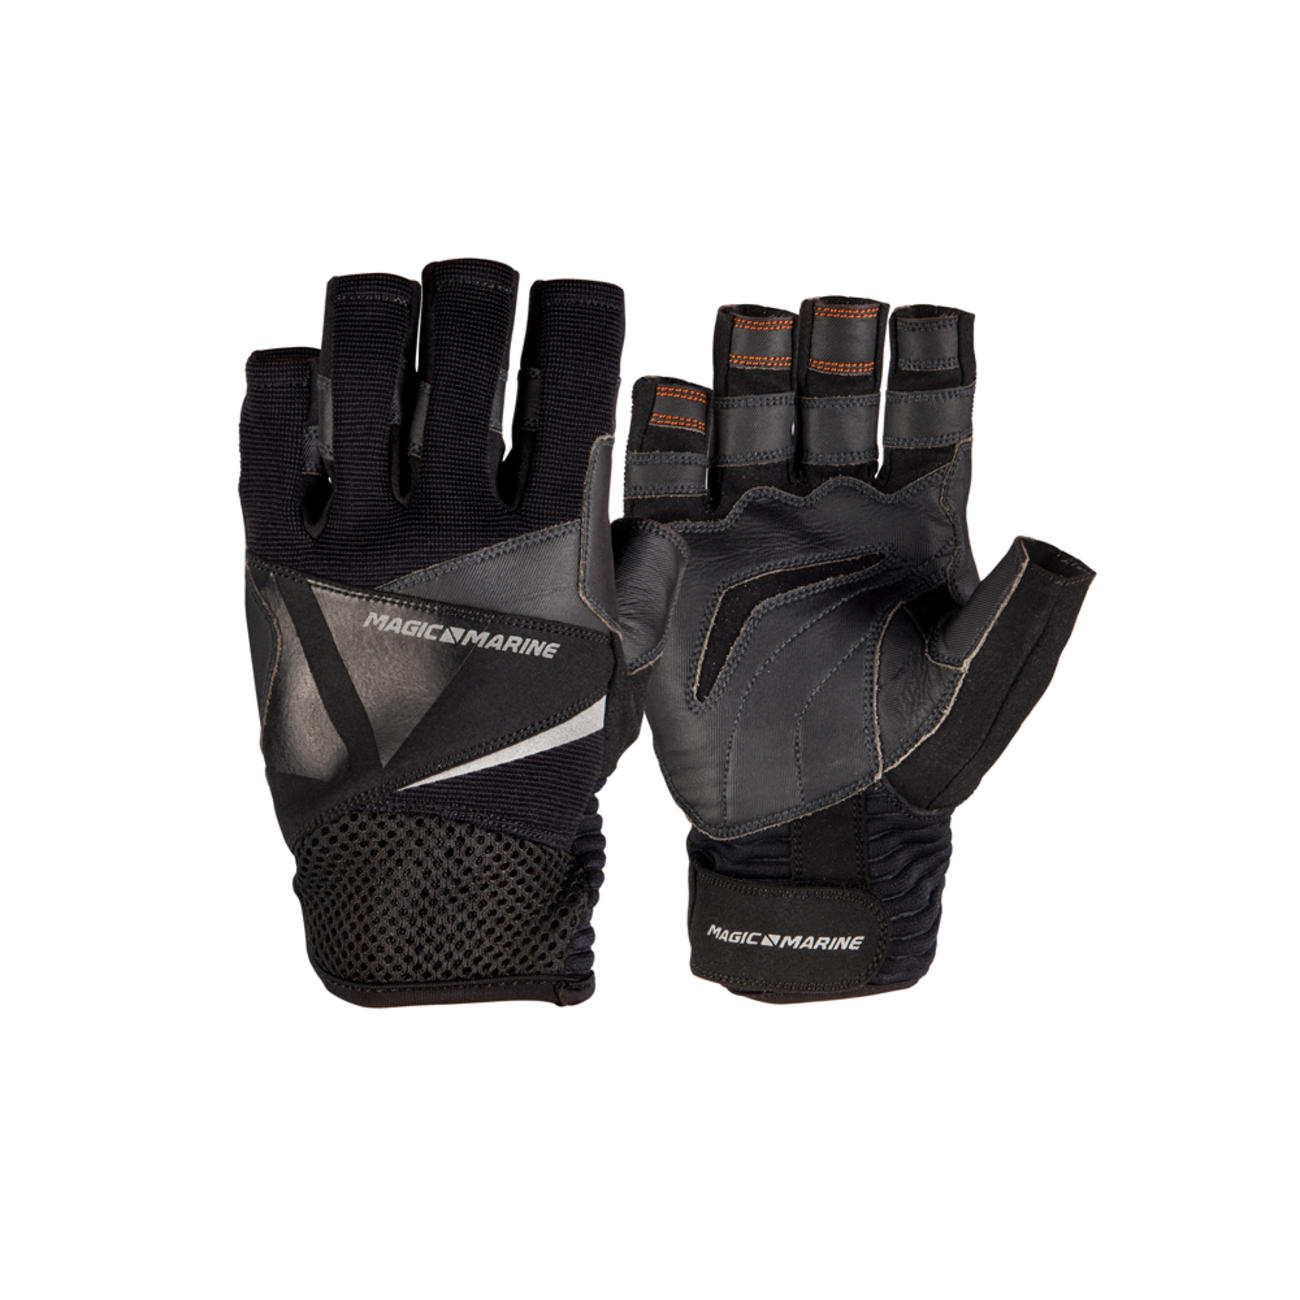 Ultimate 2 Gloves S/F レザーグローブ ショートフィンガー